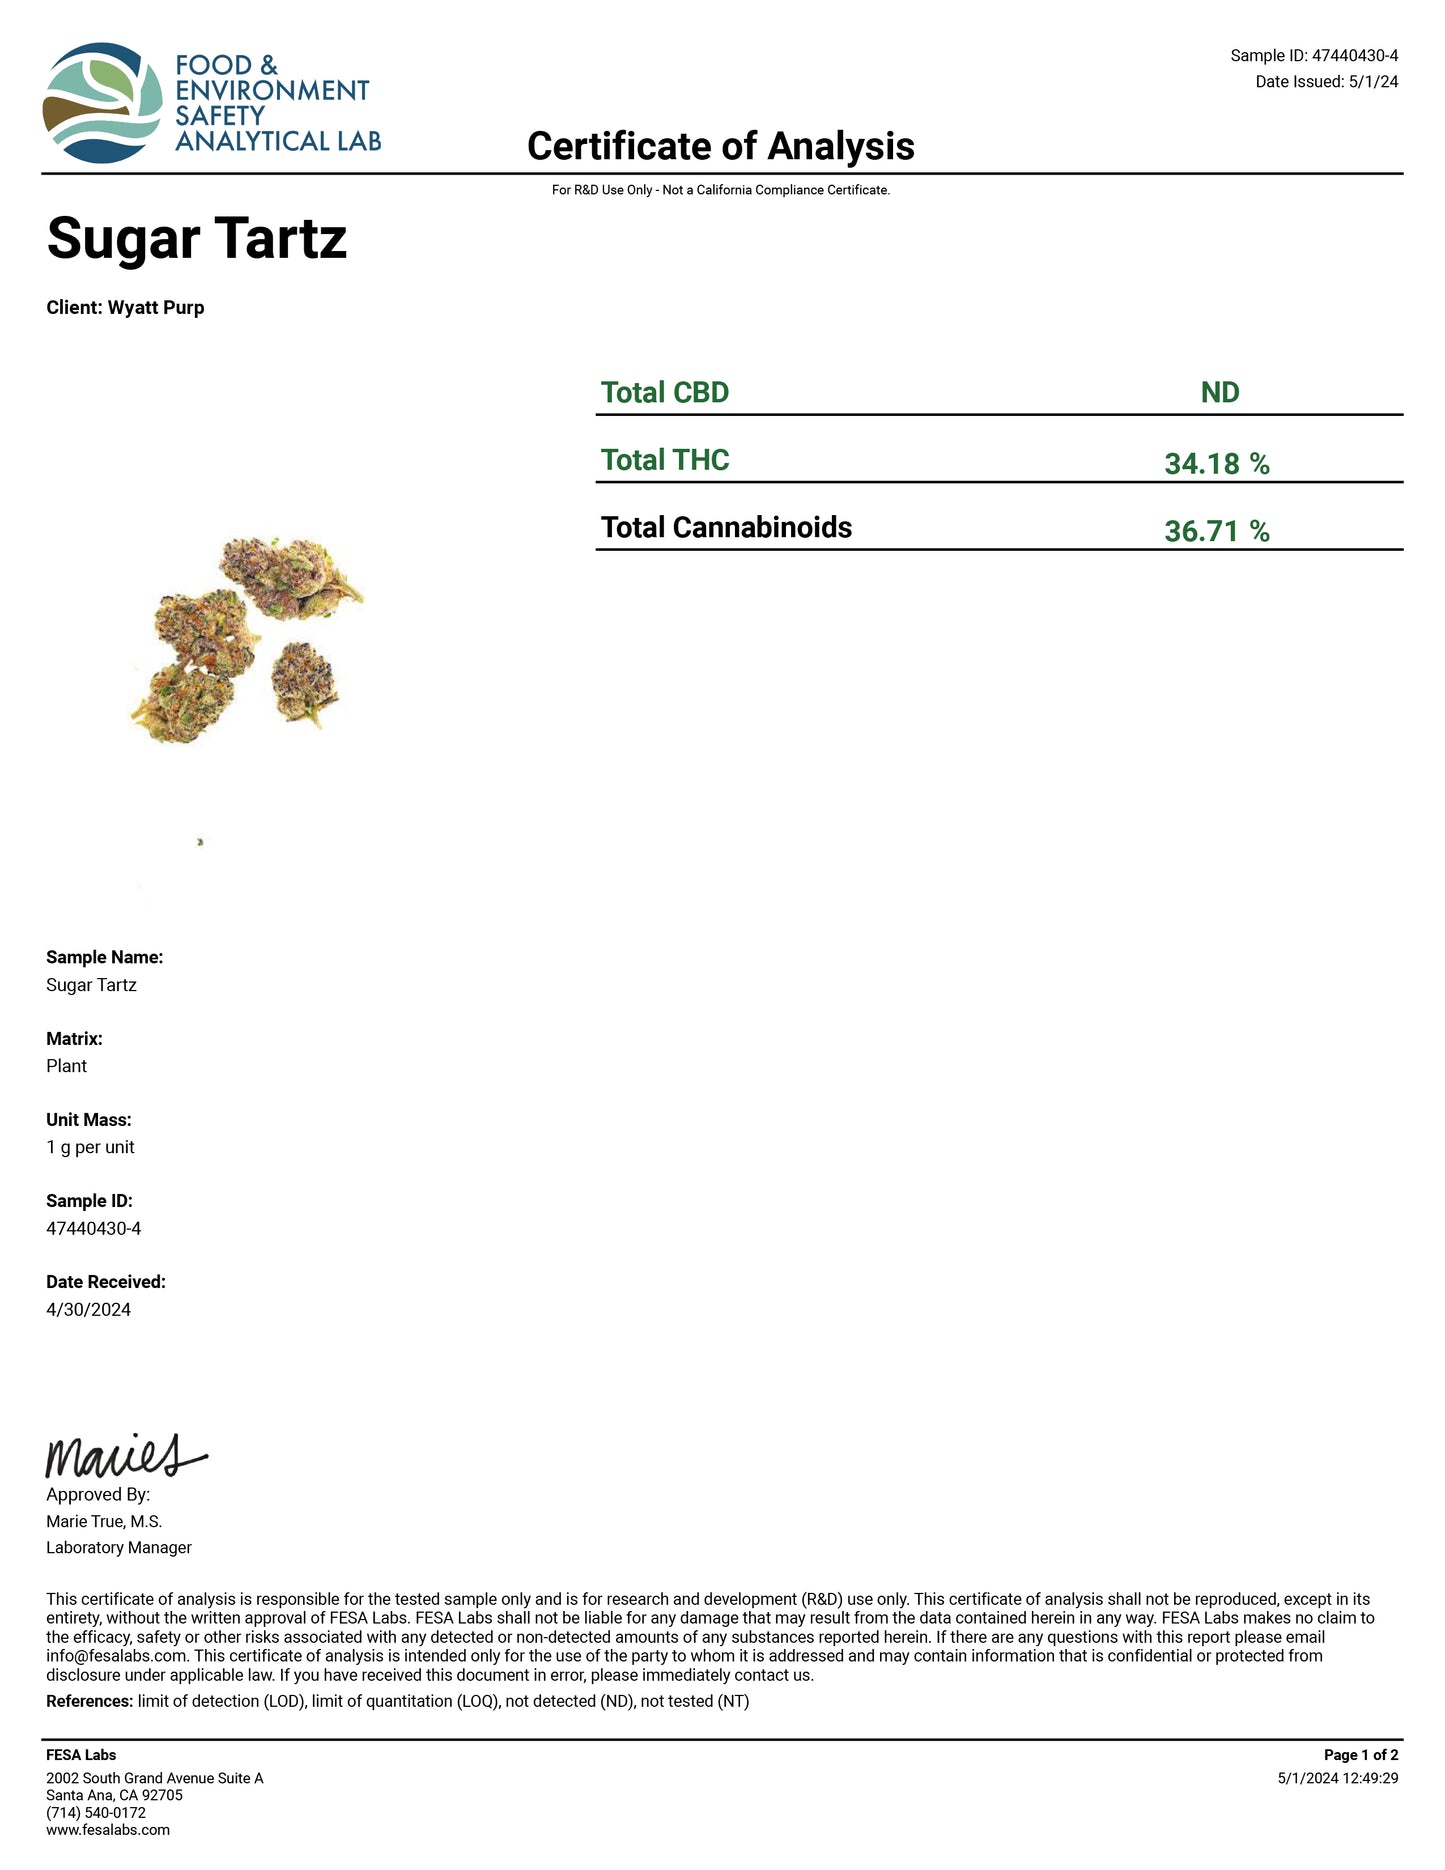 Sugar Tartz – Best THCa Smokable Hemp Flower